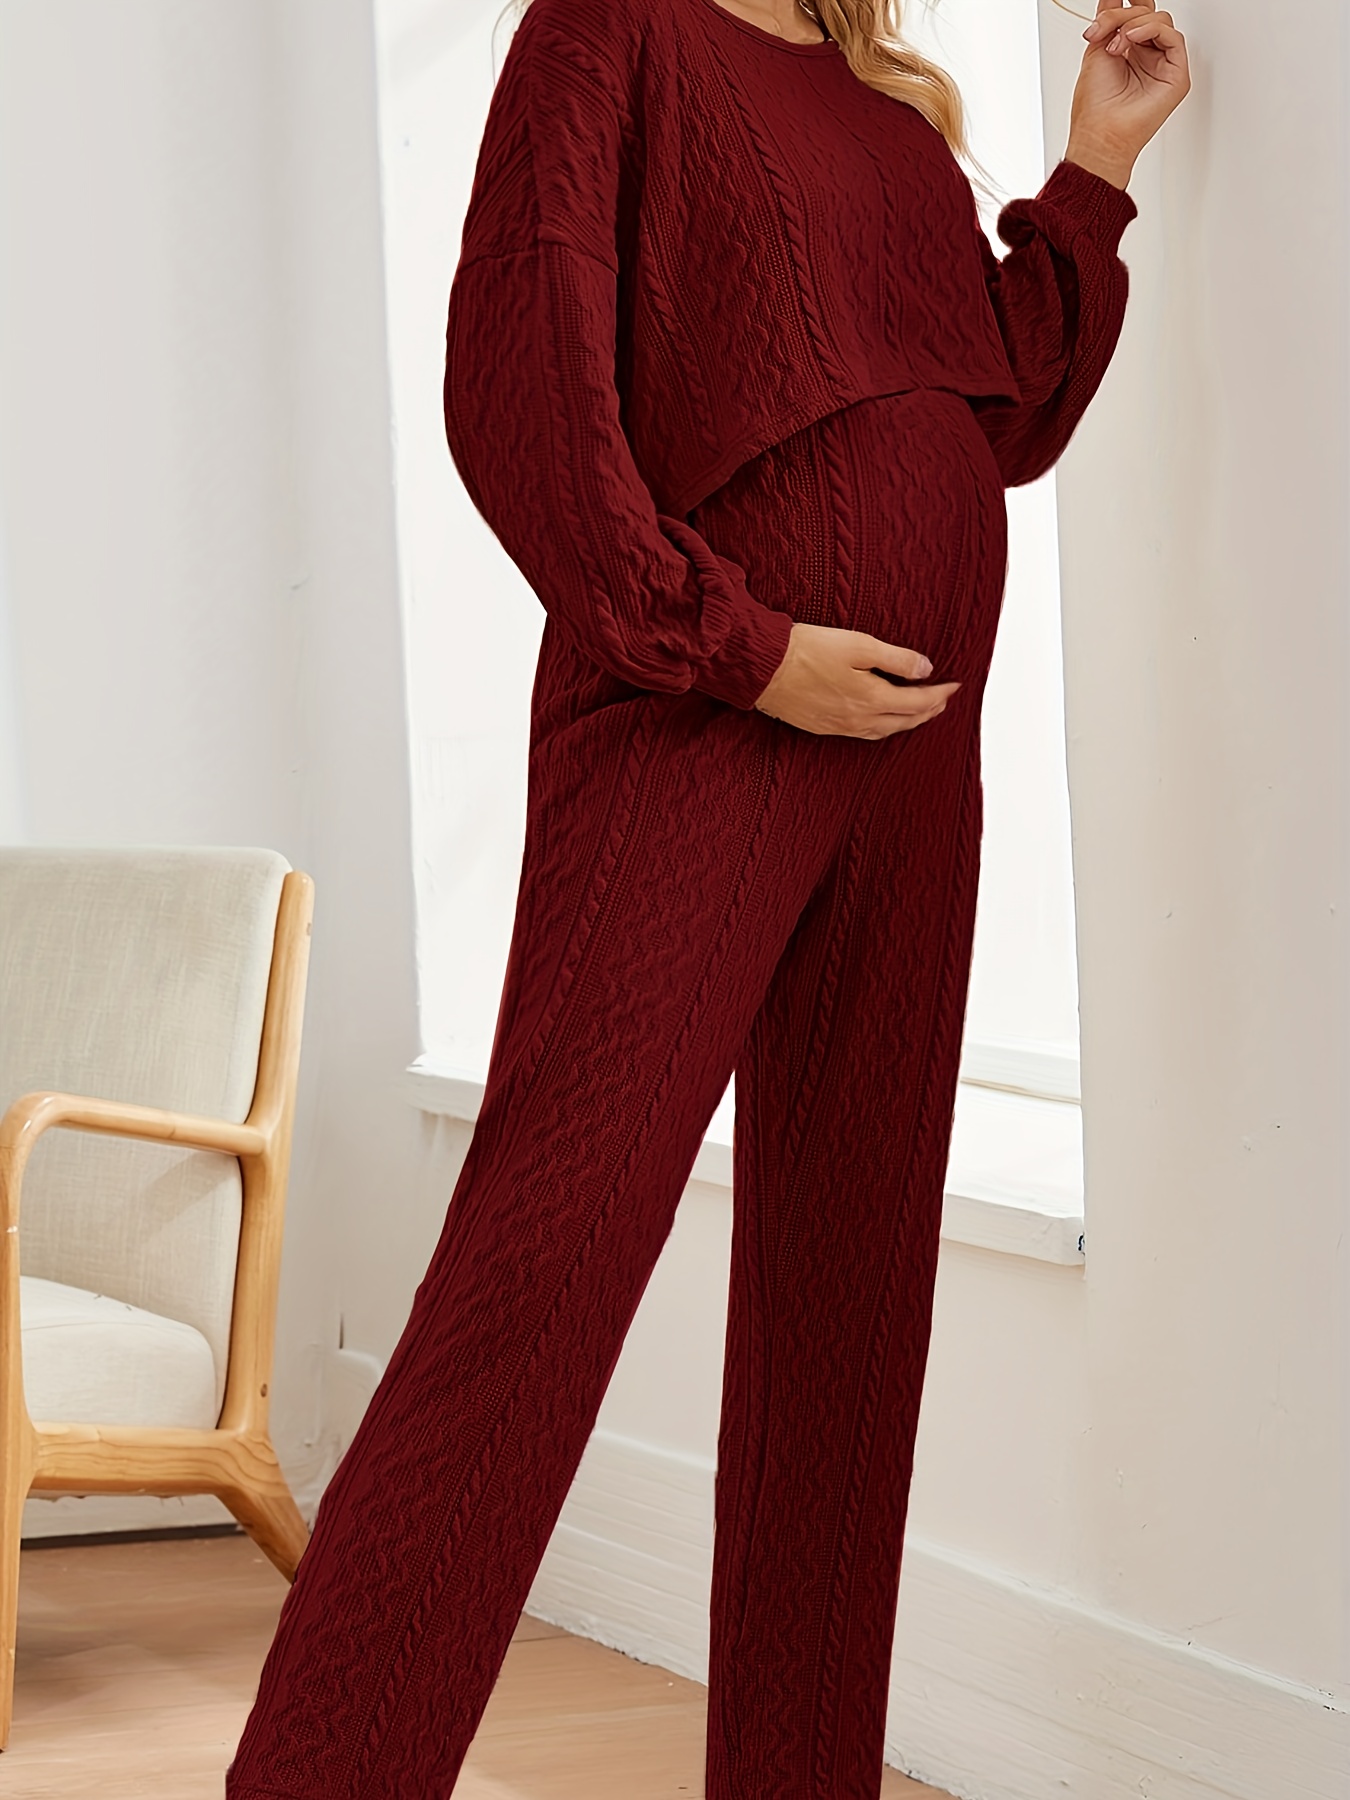 Topshop Maternity star jacquard piped shirt and pants pajama set in black